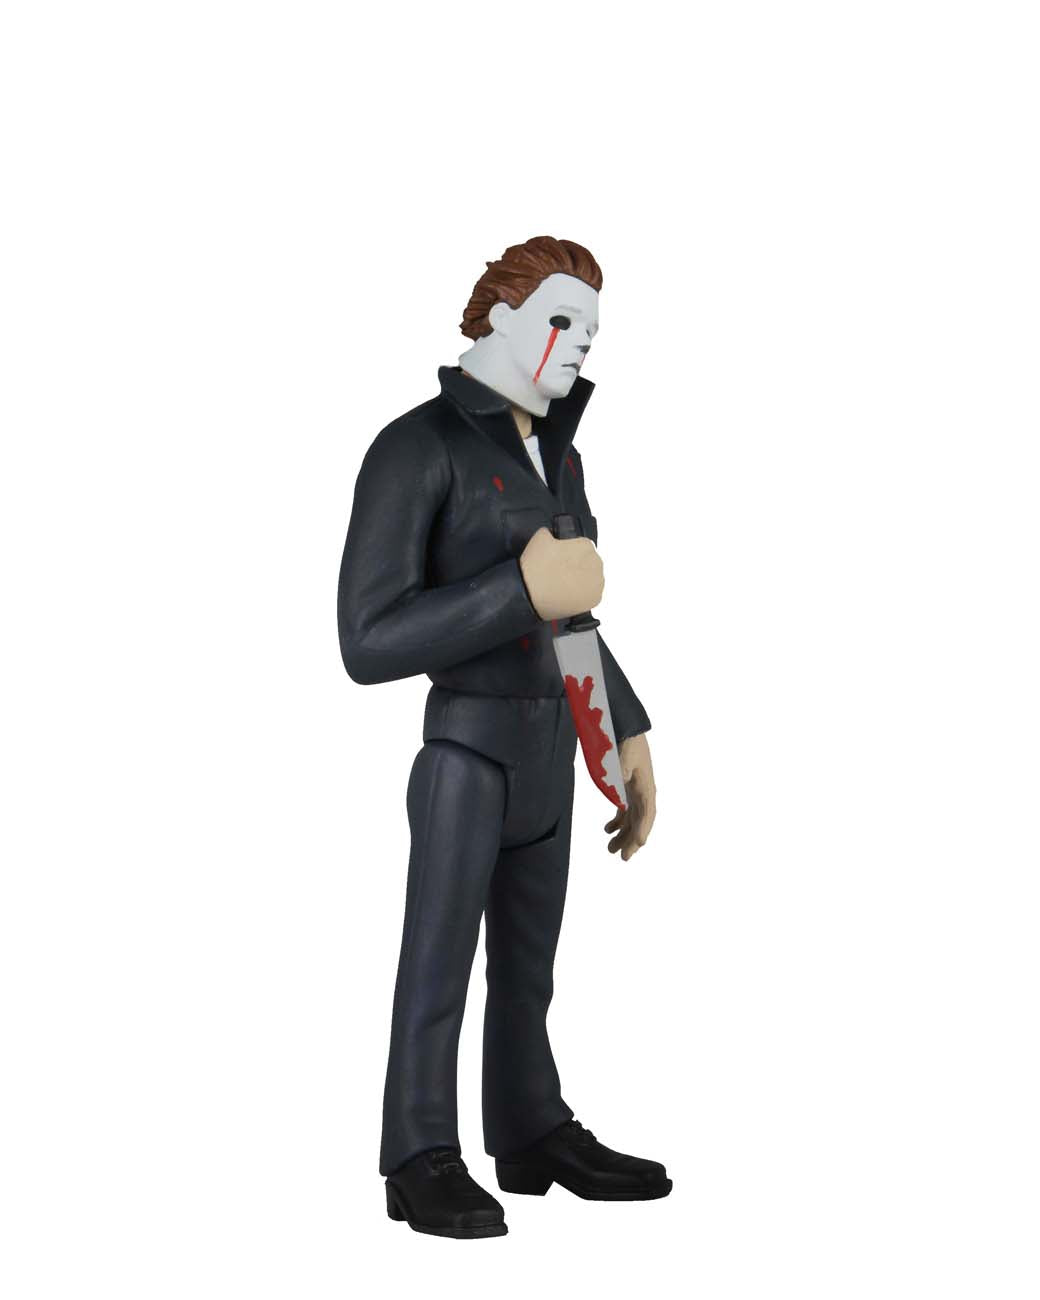 NECA Halloween 2 - Toony Terrors “Bloody Tears Michael Myers” 6" Scale Action Figure